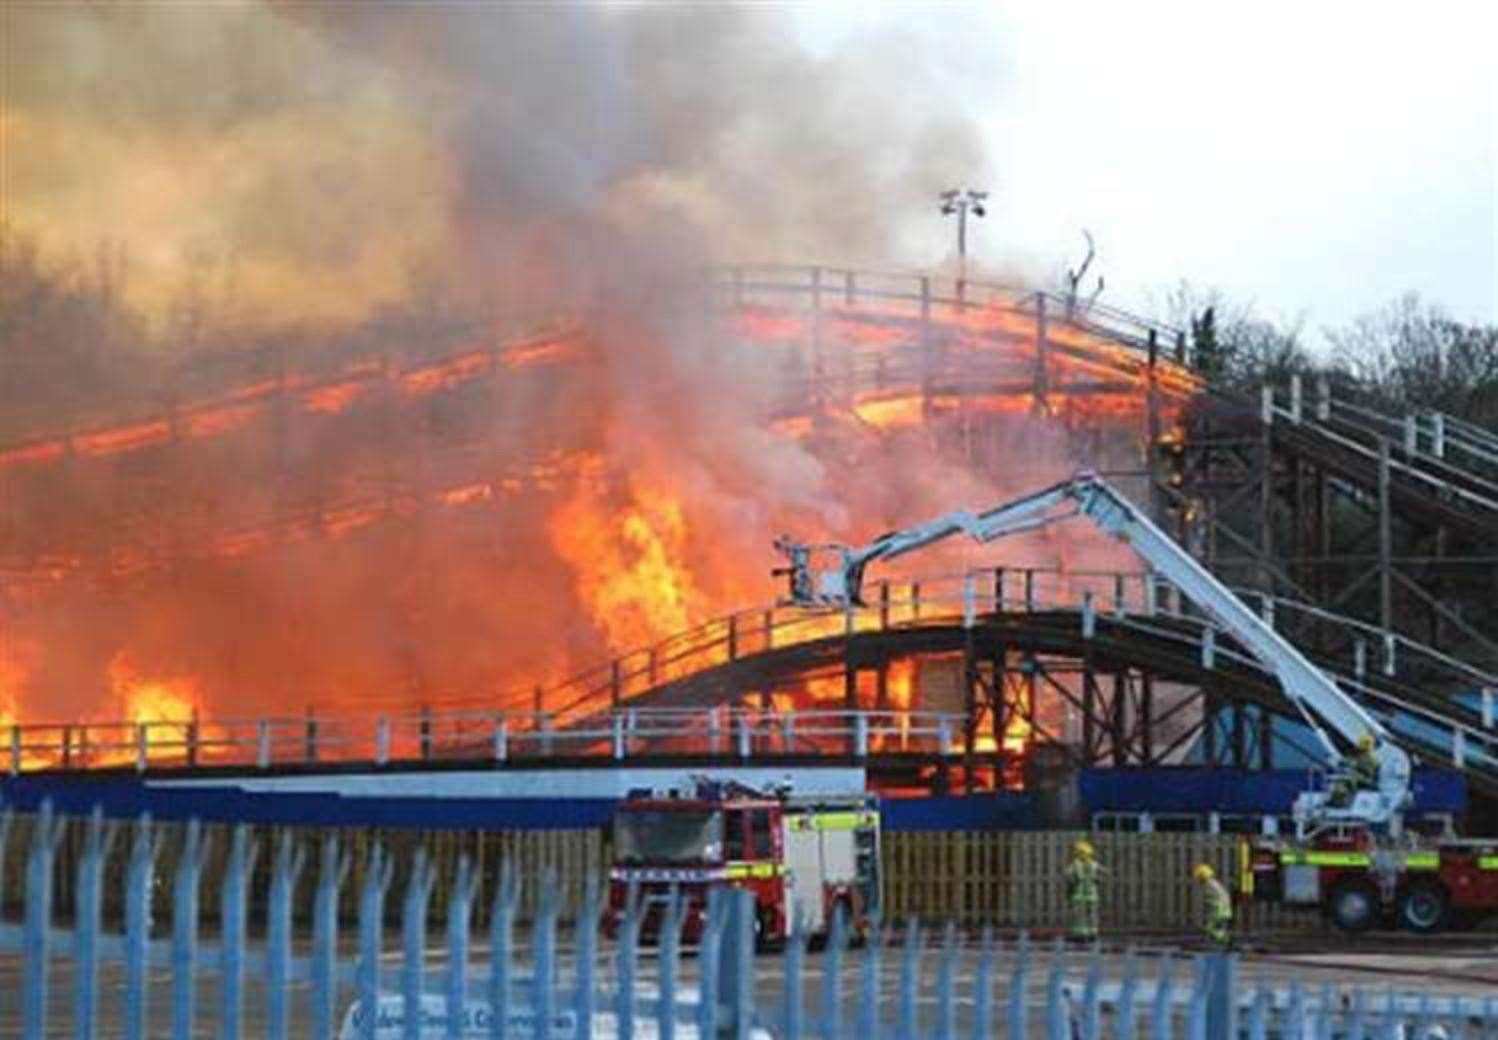 The Scenic Railway blaze in 2008